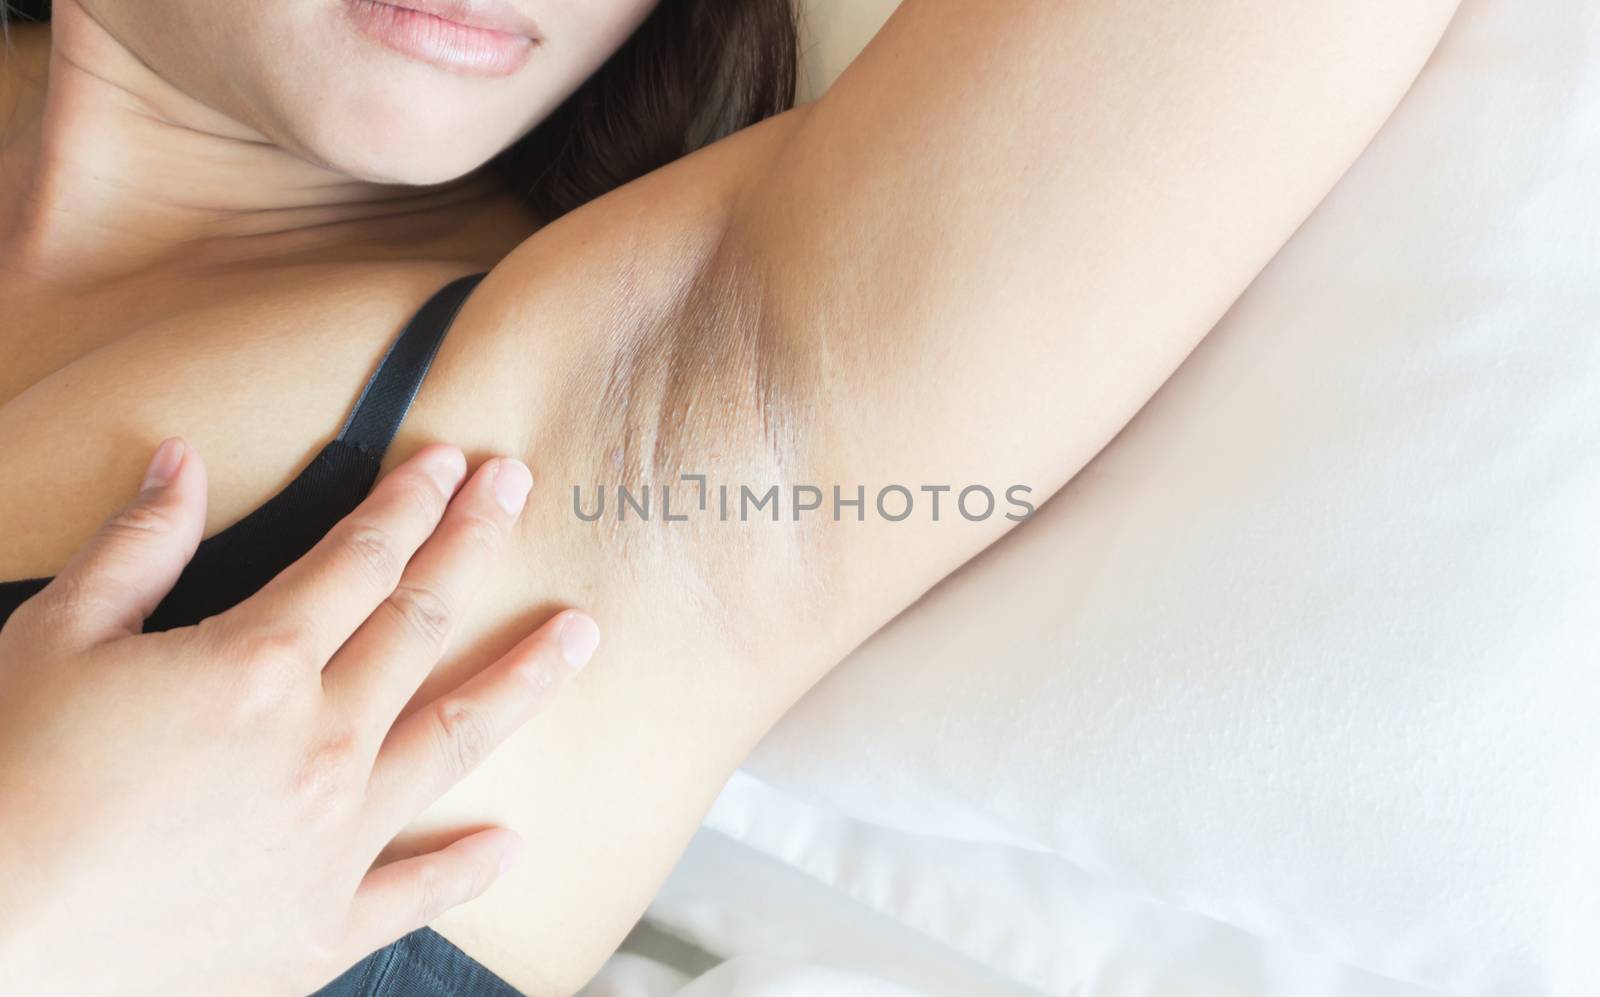 Women problem black armpit for skin care and beauty concept by pt.pongsak@gmail.com